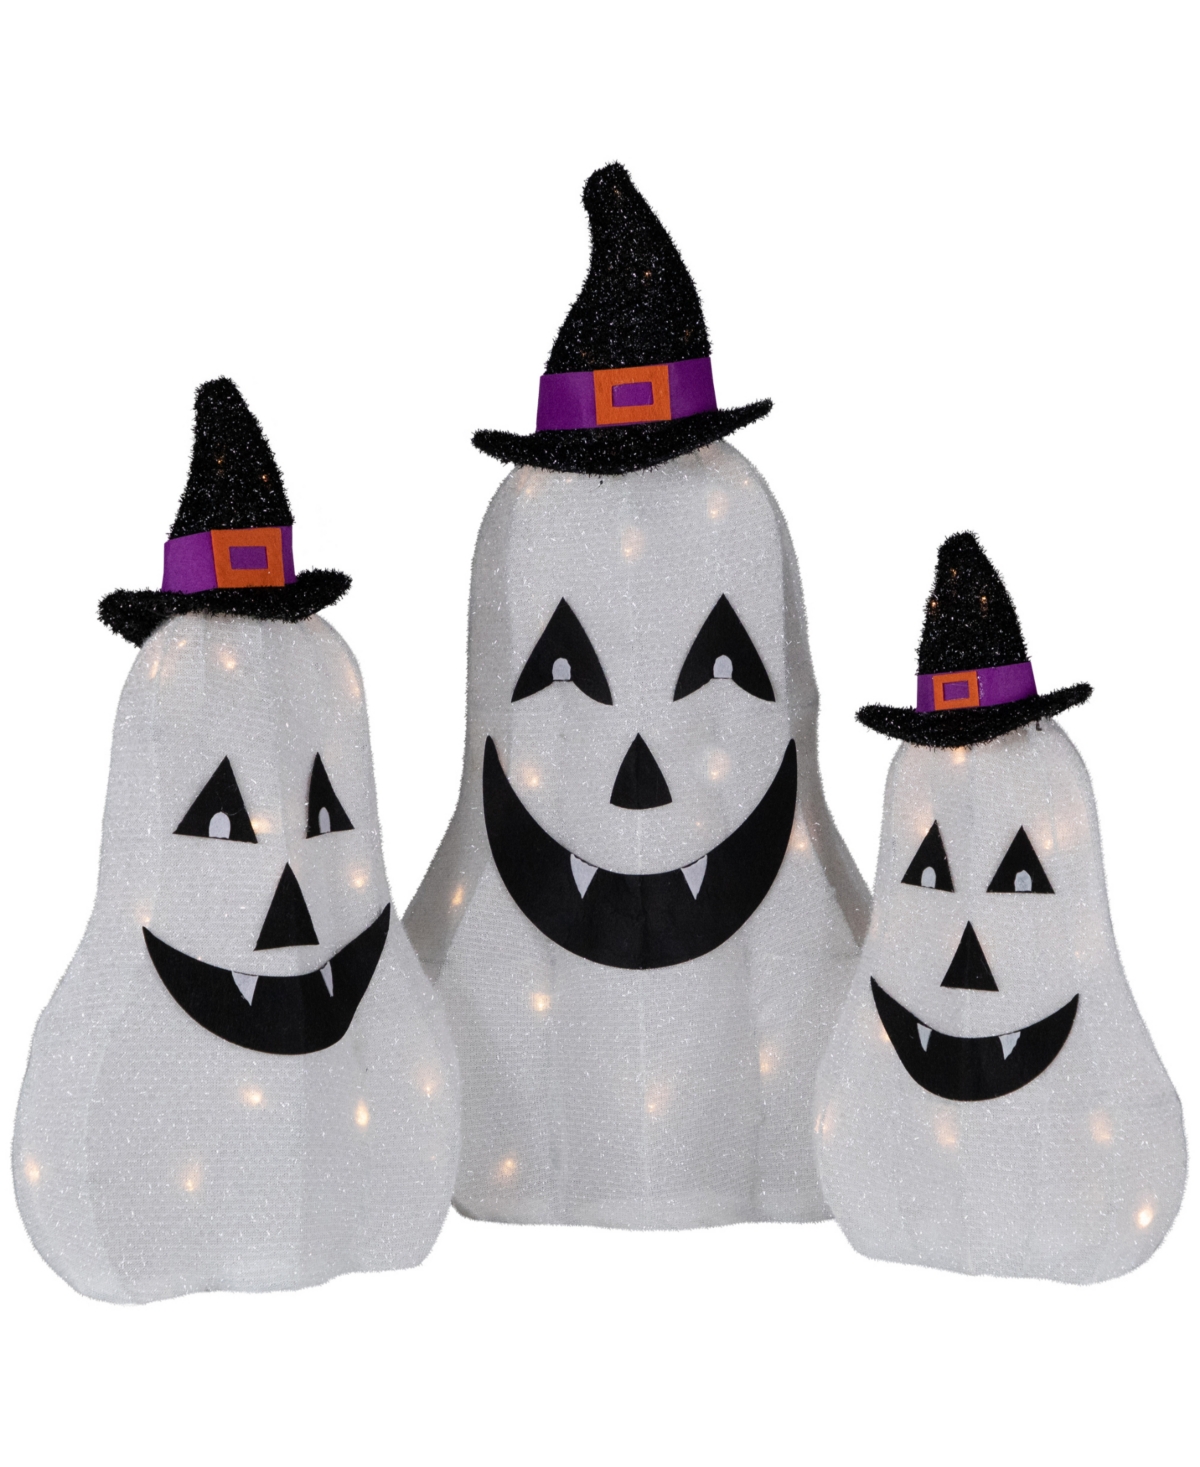 Set of 3 Led Jack O' Lantern Ghosts Outdoor Halloween Decorations - White